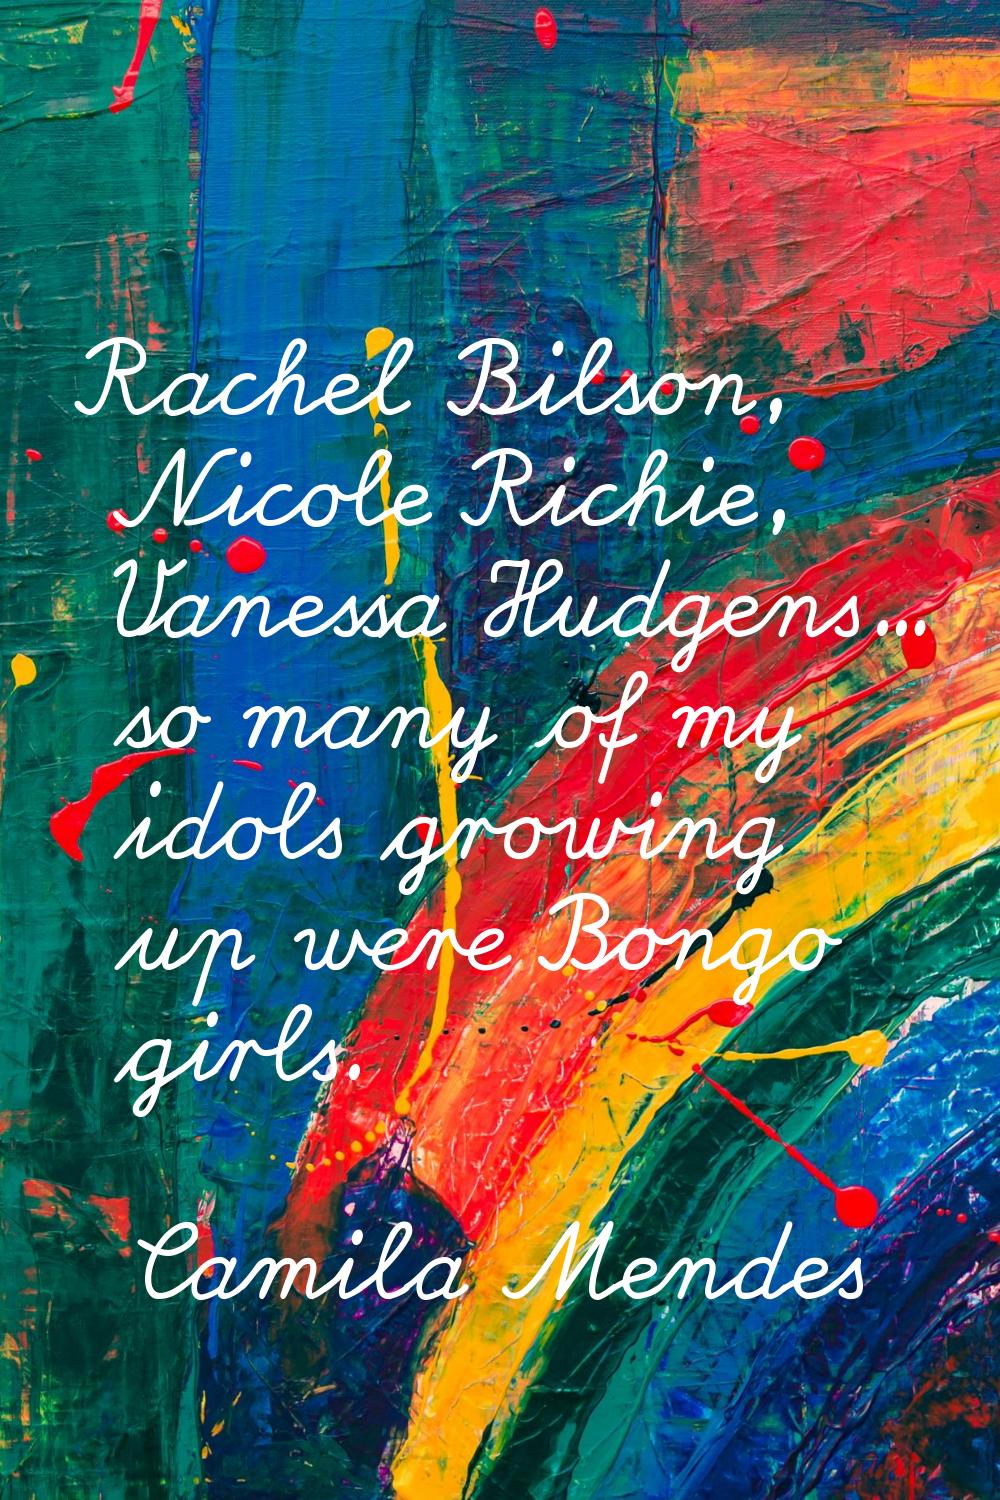 Rachel Bilson, Nicole Richie, Vanessa Hudgens... so many of my idols growing up were Bongo girls.